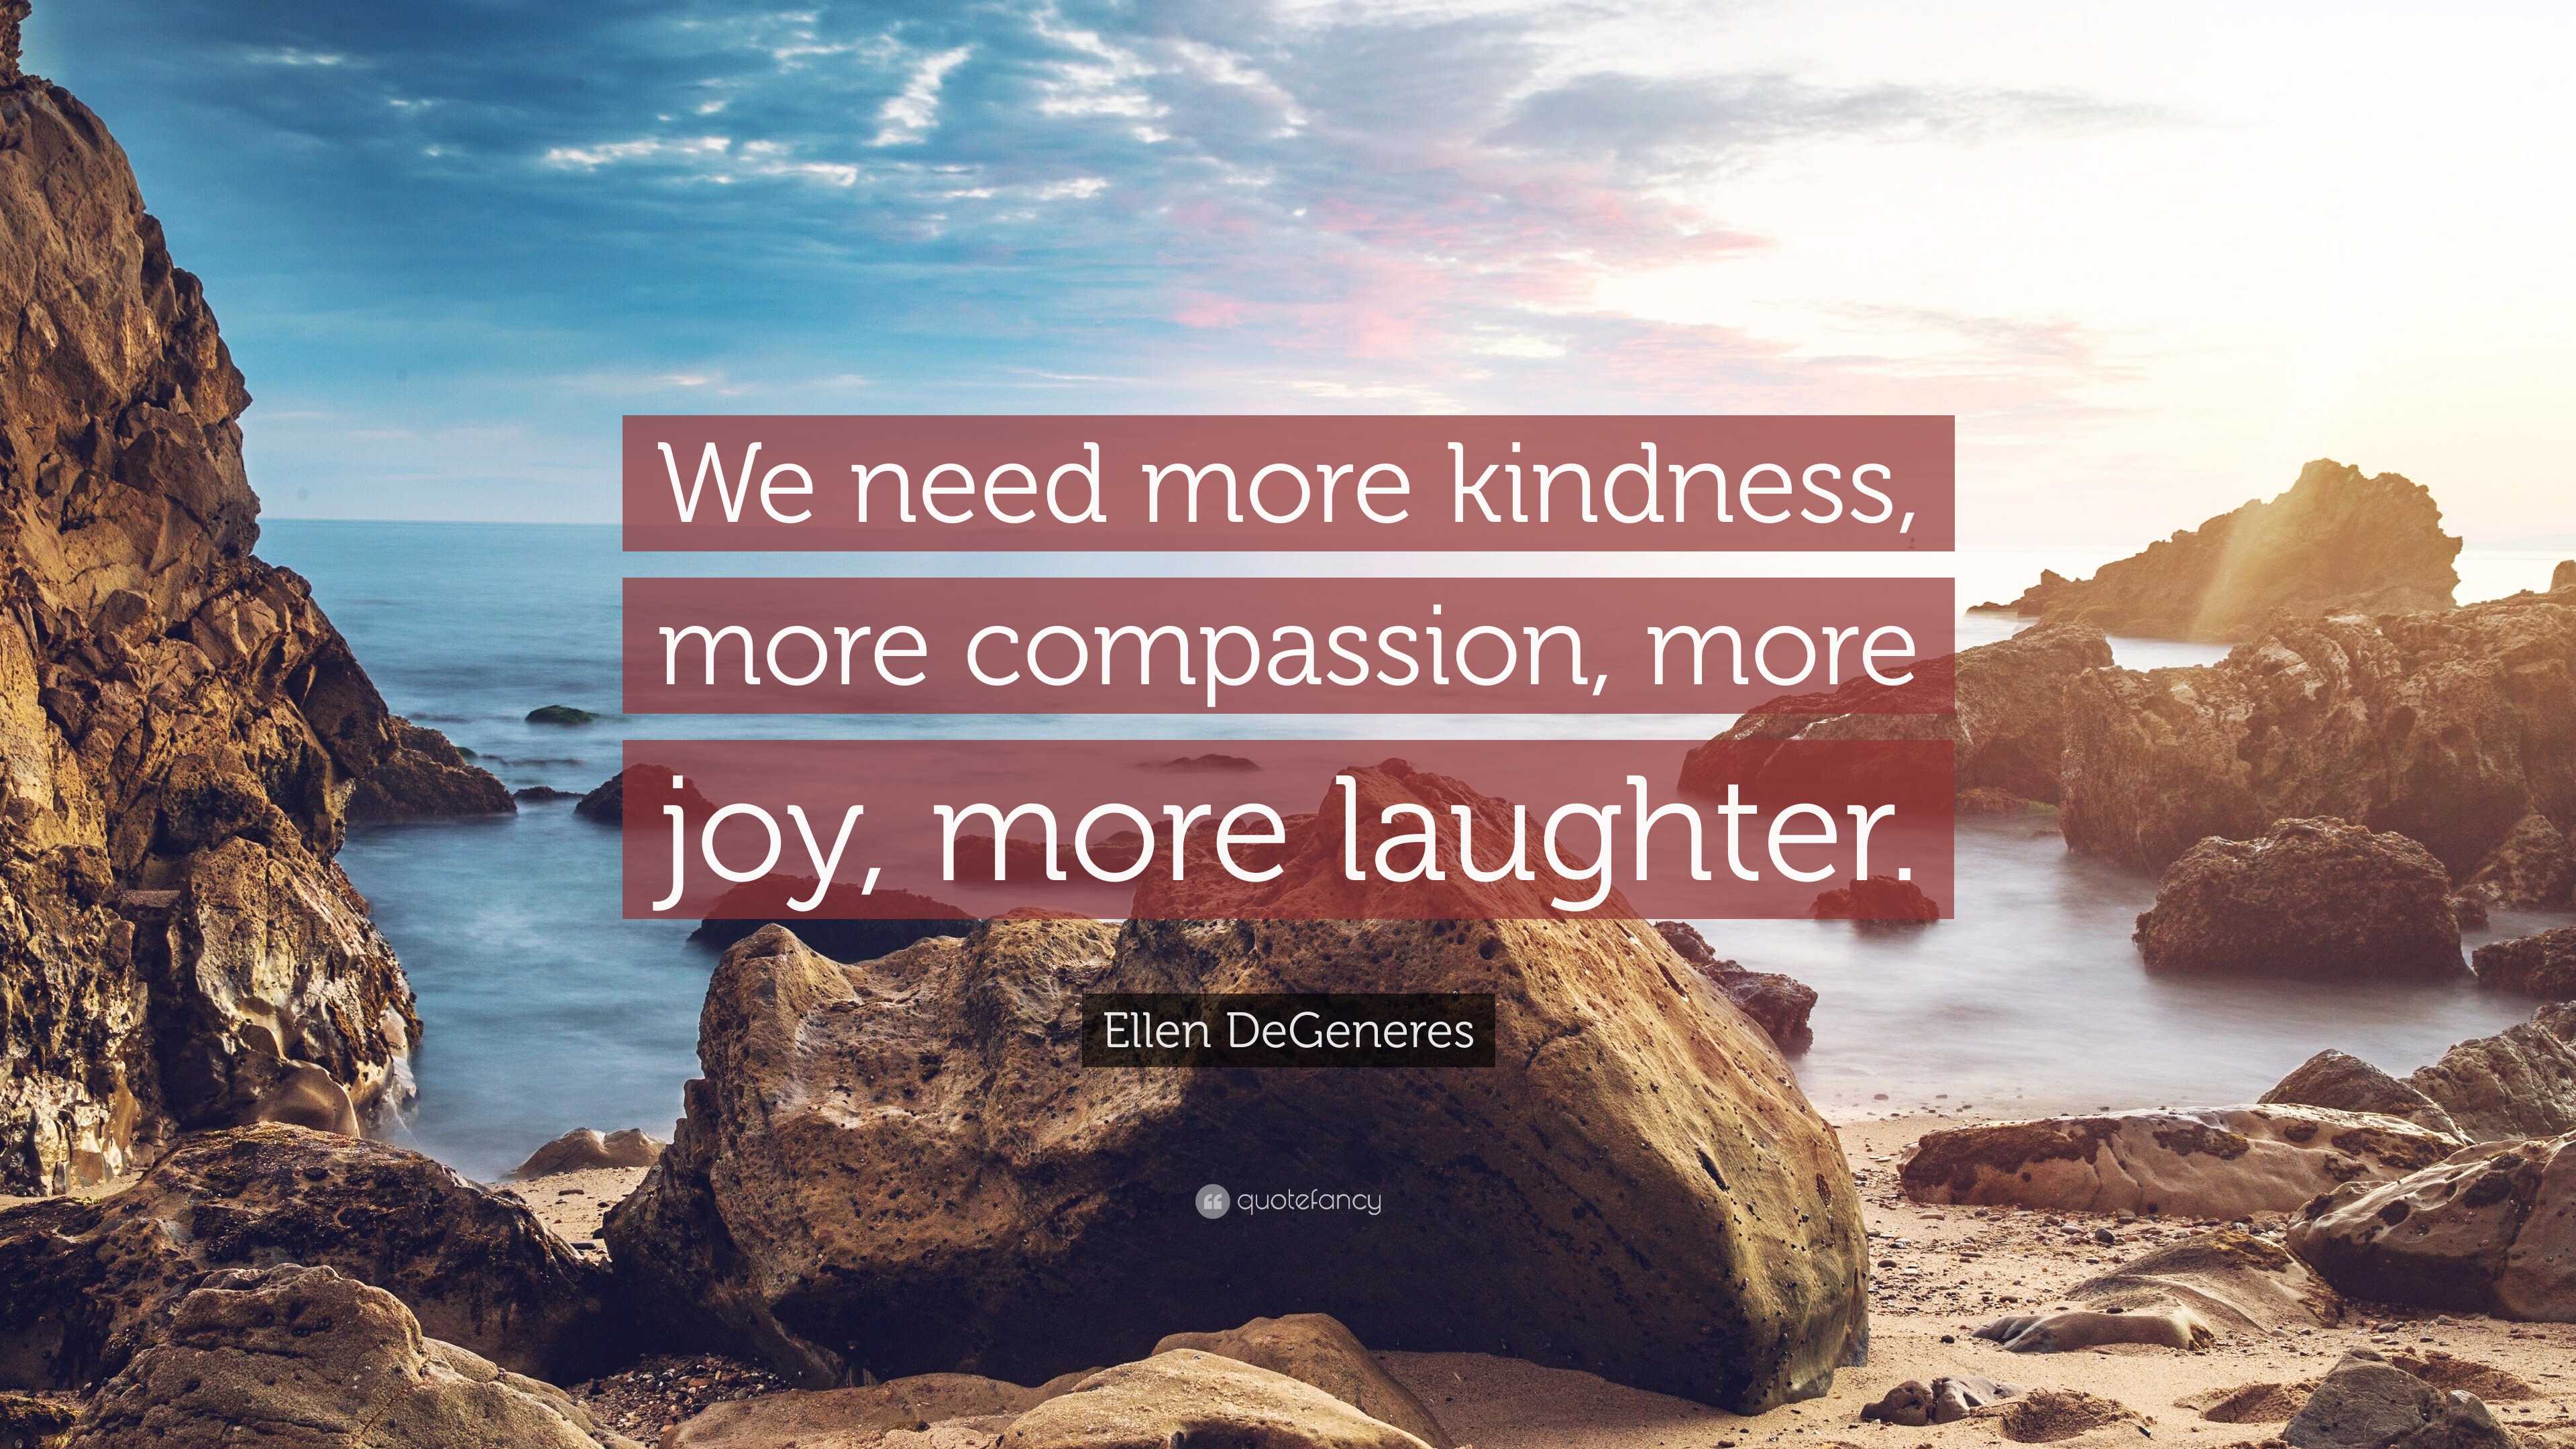 Ellen DeGeneres Quote: “We need more kindness, more compassion, more joy,  more laughter.”